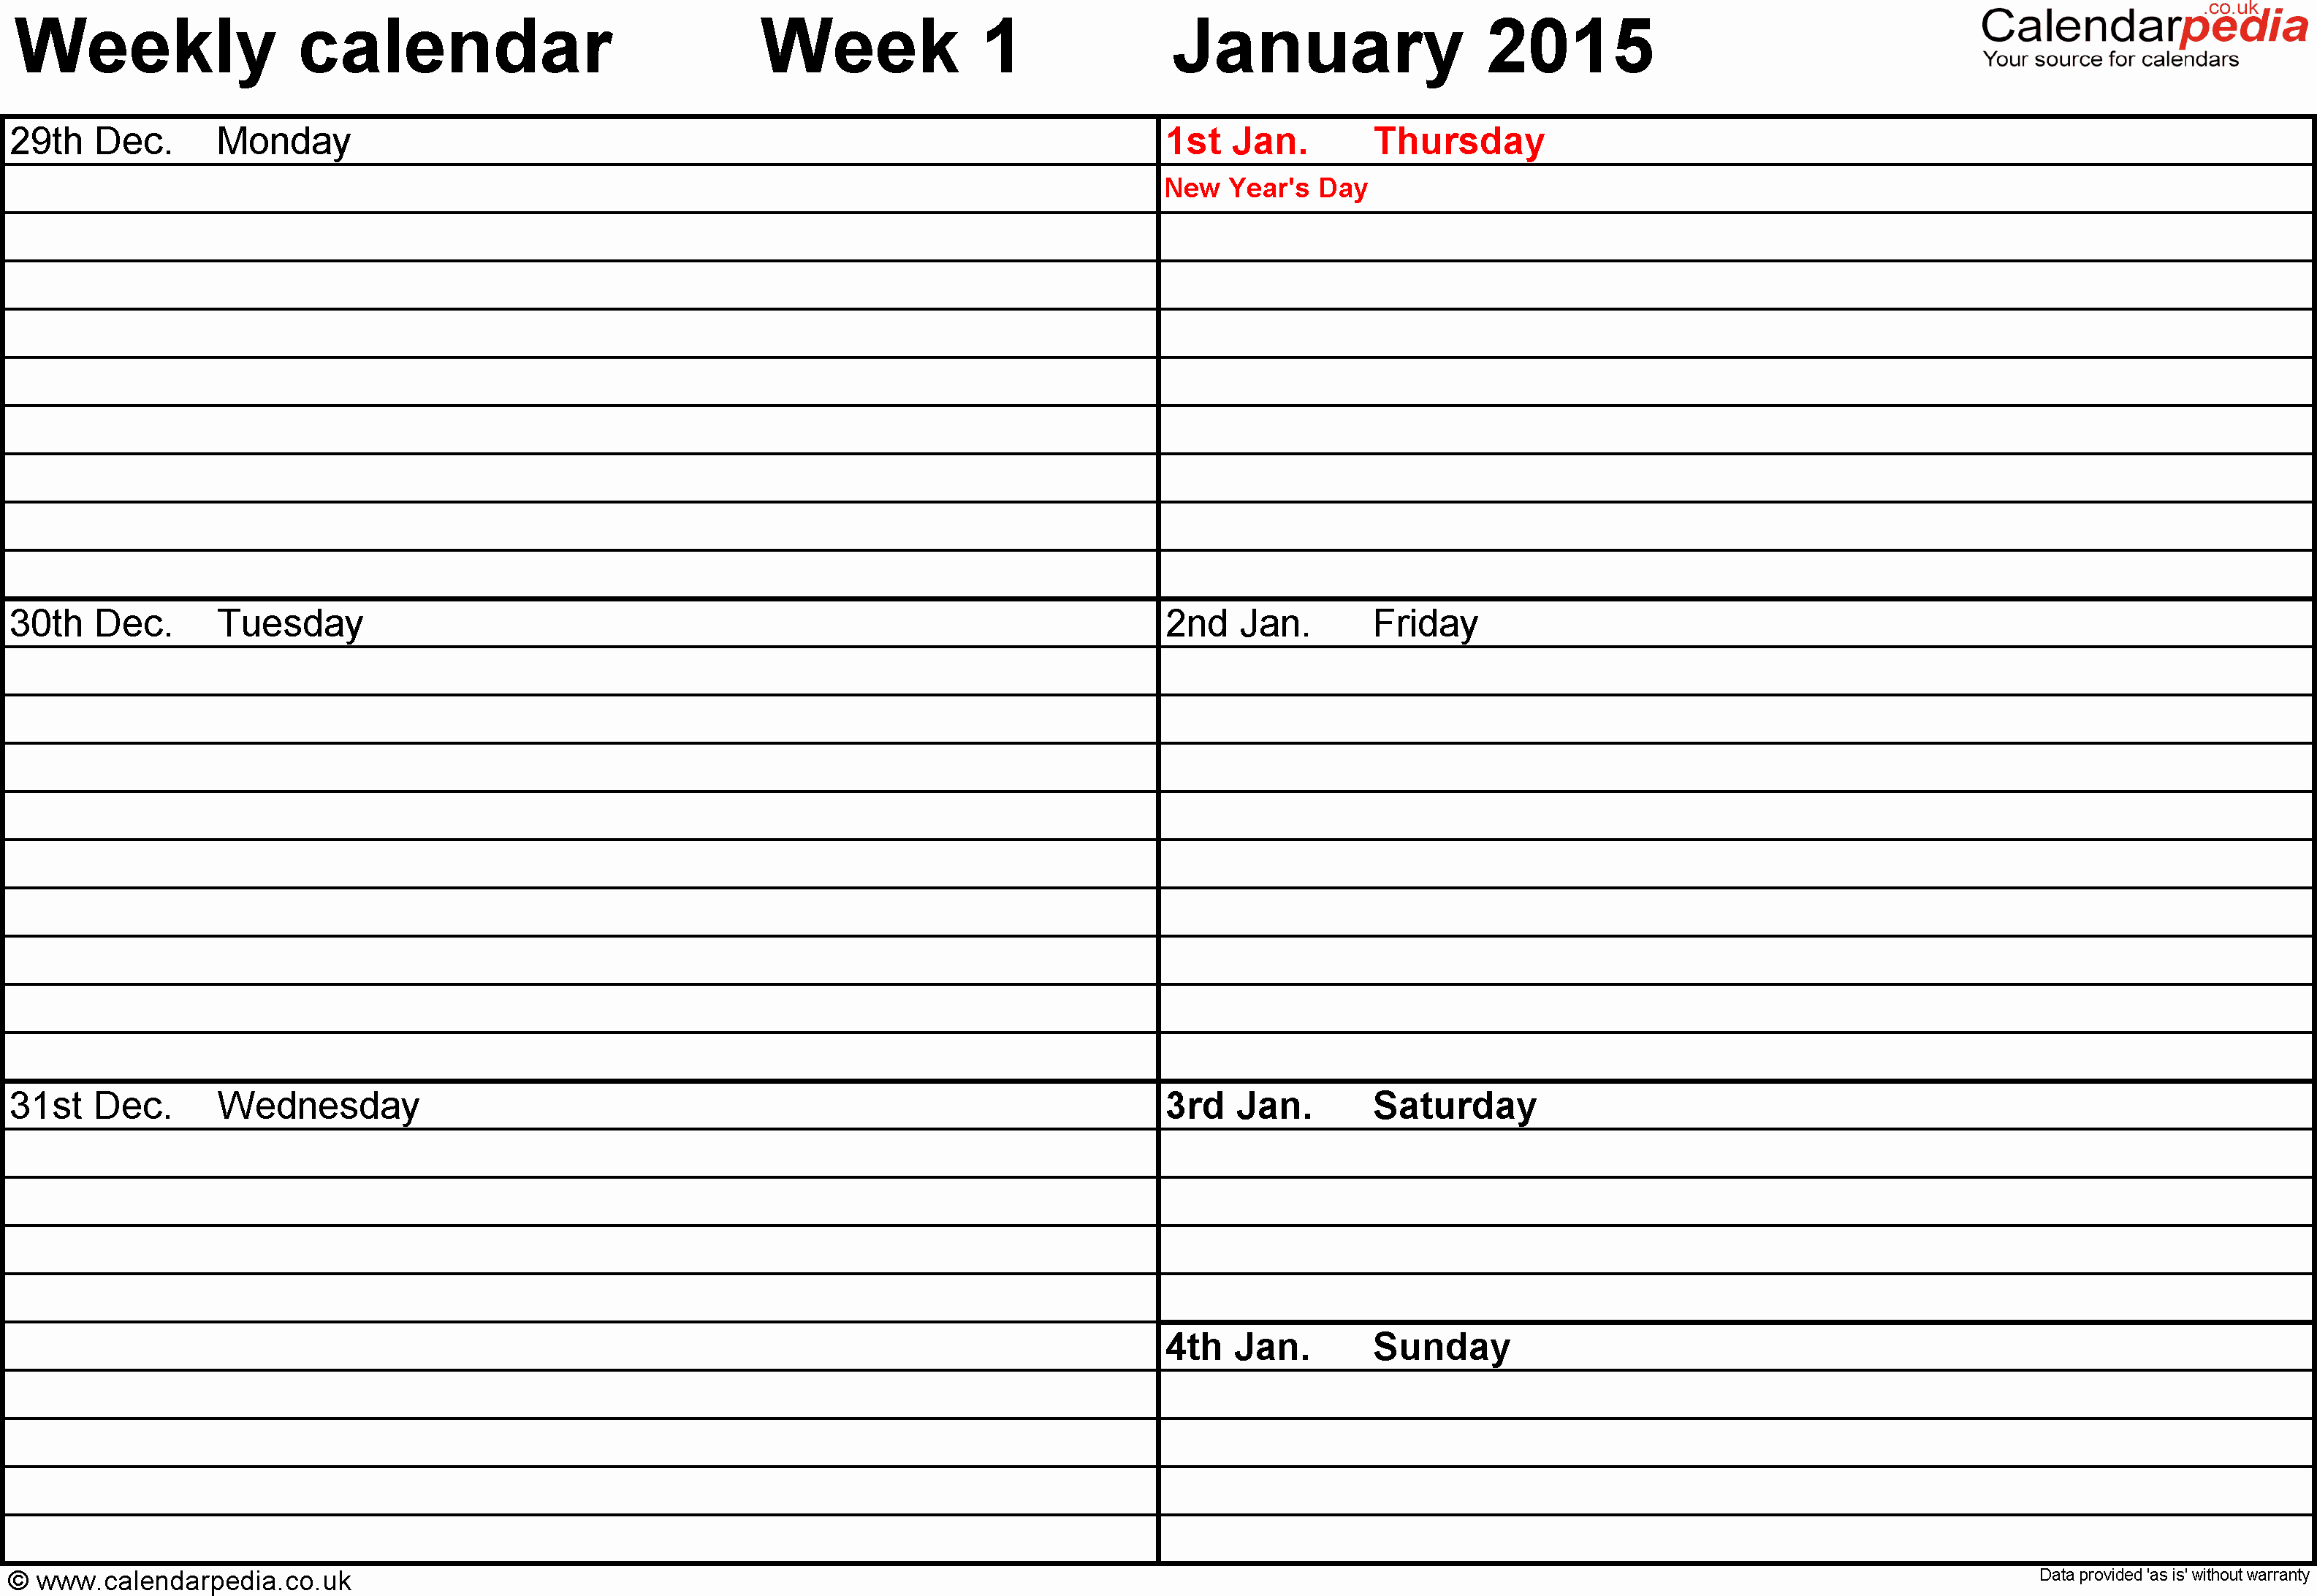 Weekly Calendar Template 2017 Lovely Weekly Calendar Template 2017